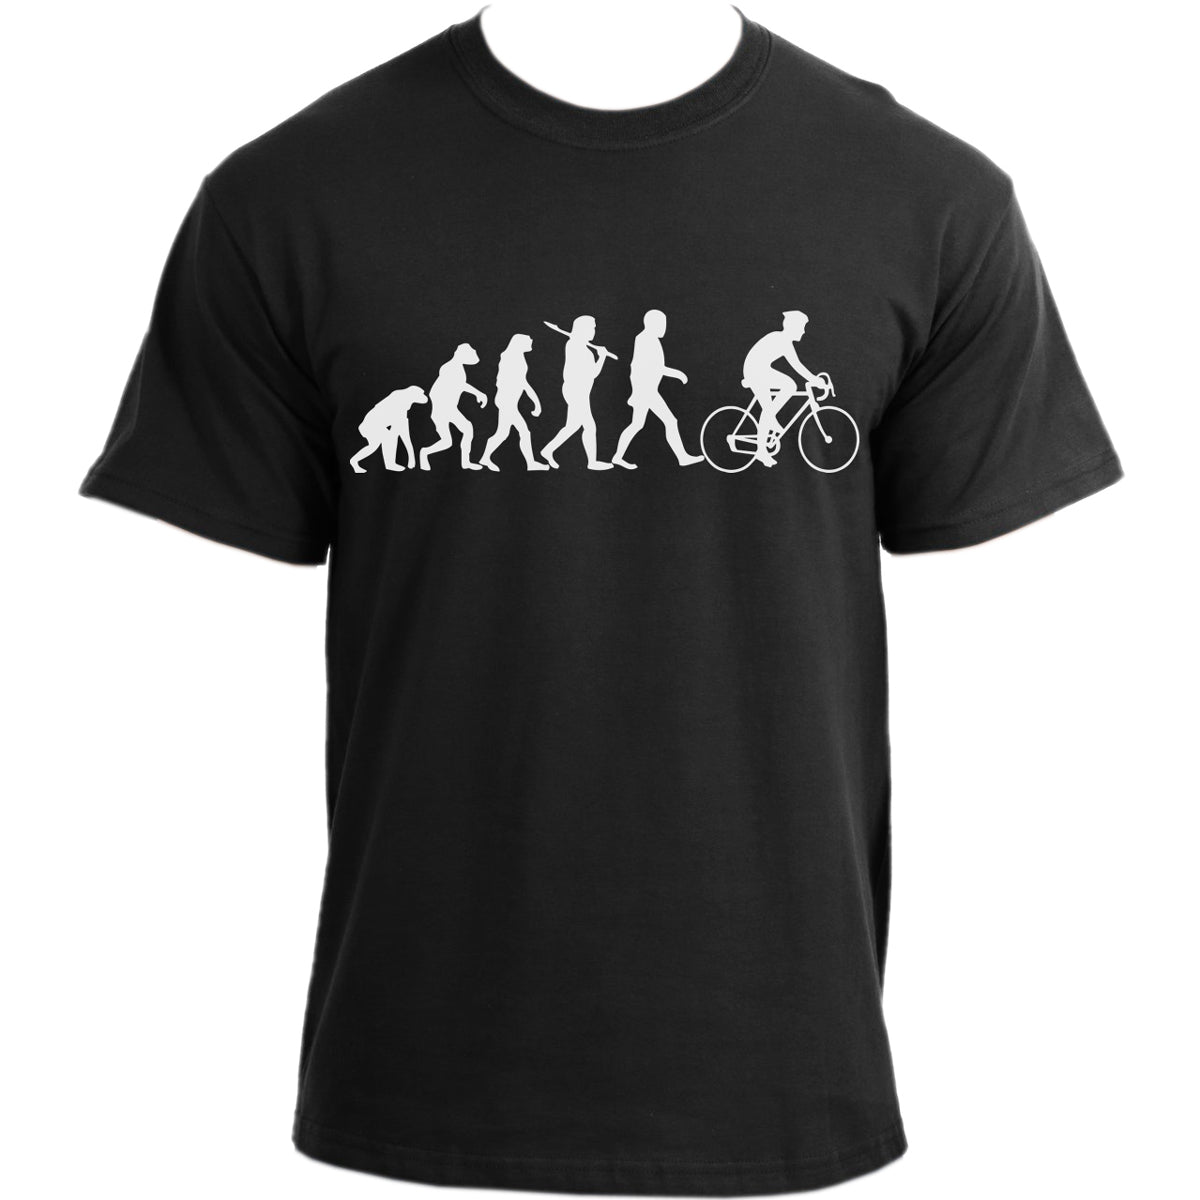 Cycling Evolution T-Shirt I Bicycle Tee Bike Sports Top I Funny Ape to Man Evolution Cyclist Tshirt For Men